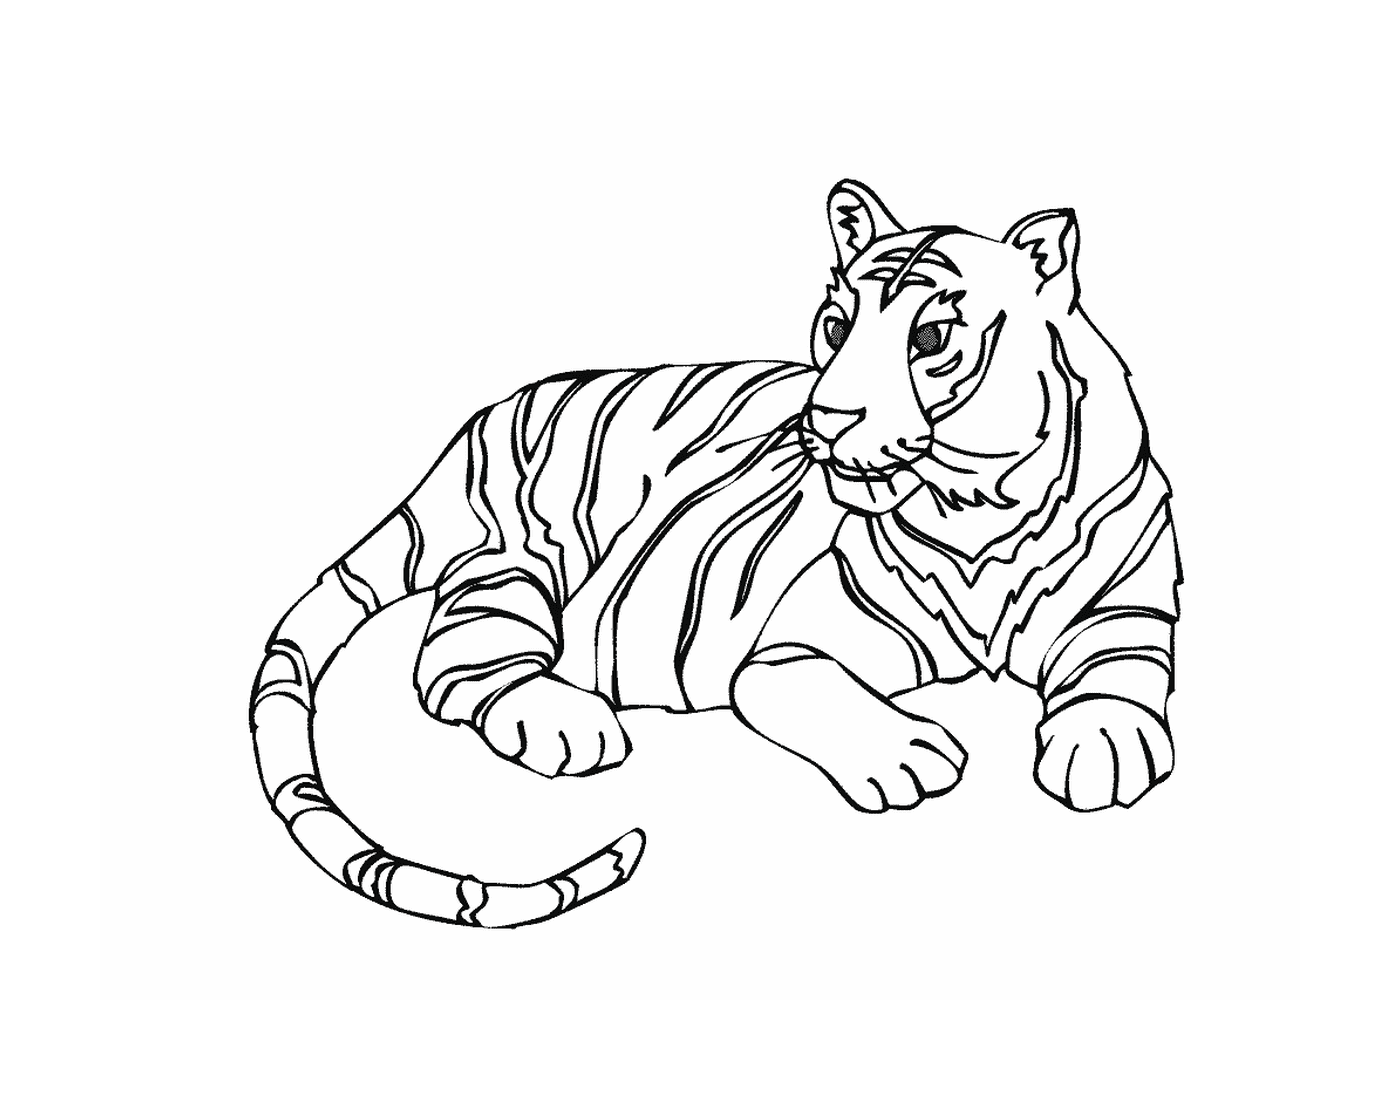  Un tigre en la sabana 